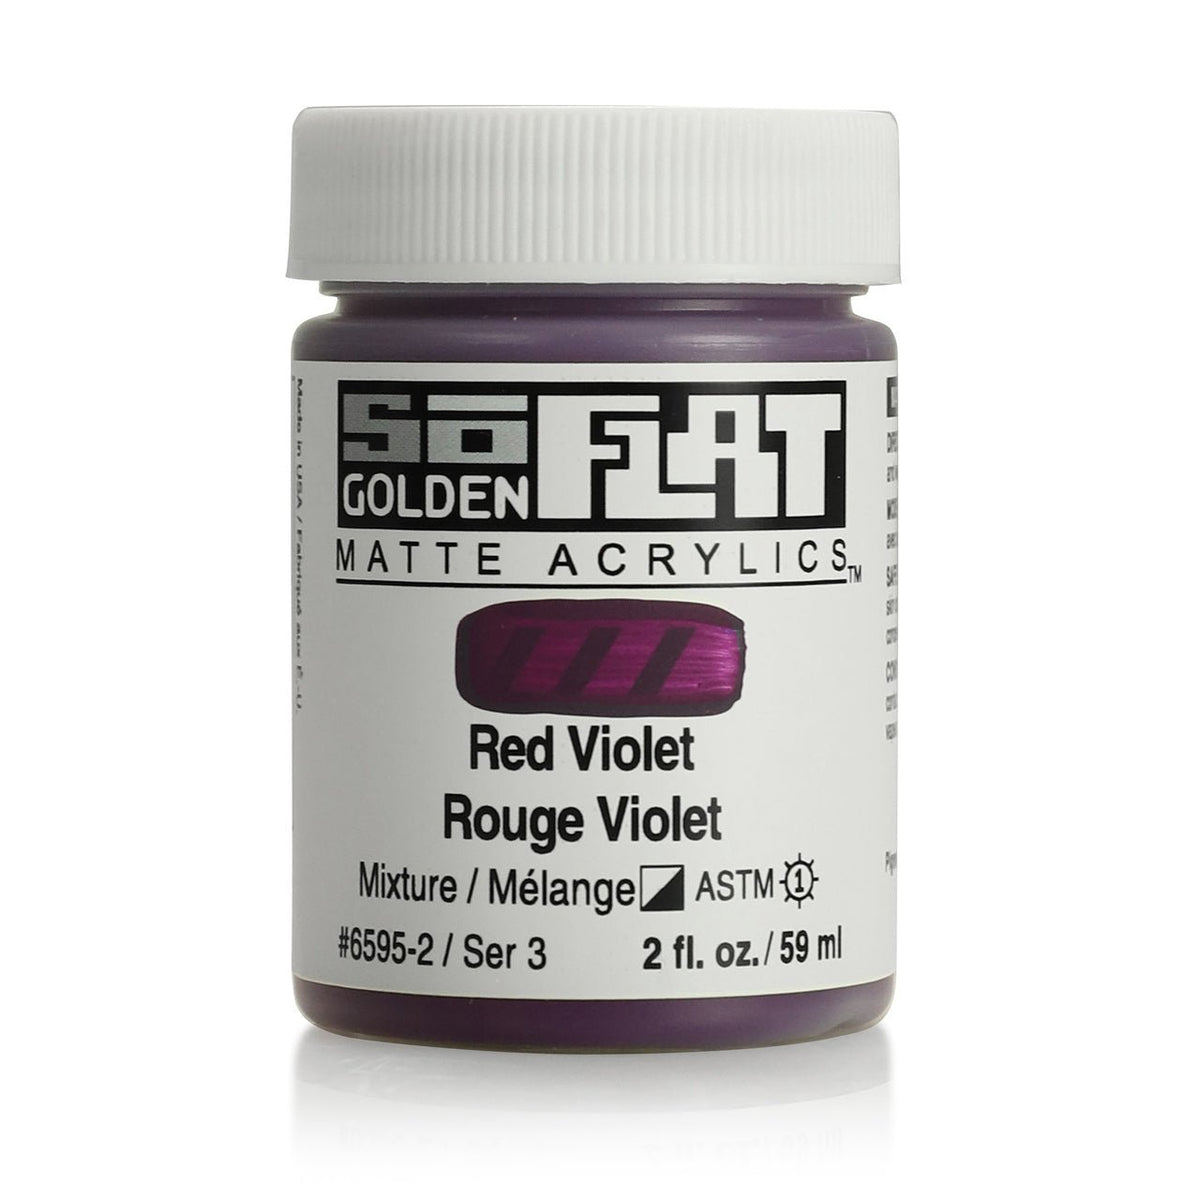 Golden SoFlat Matte Acrylic Paint - Red Violet 2 oz jar - merriartist.com